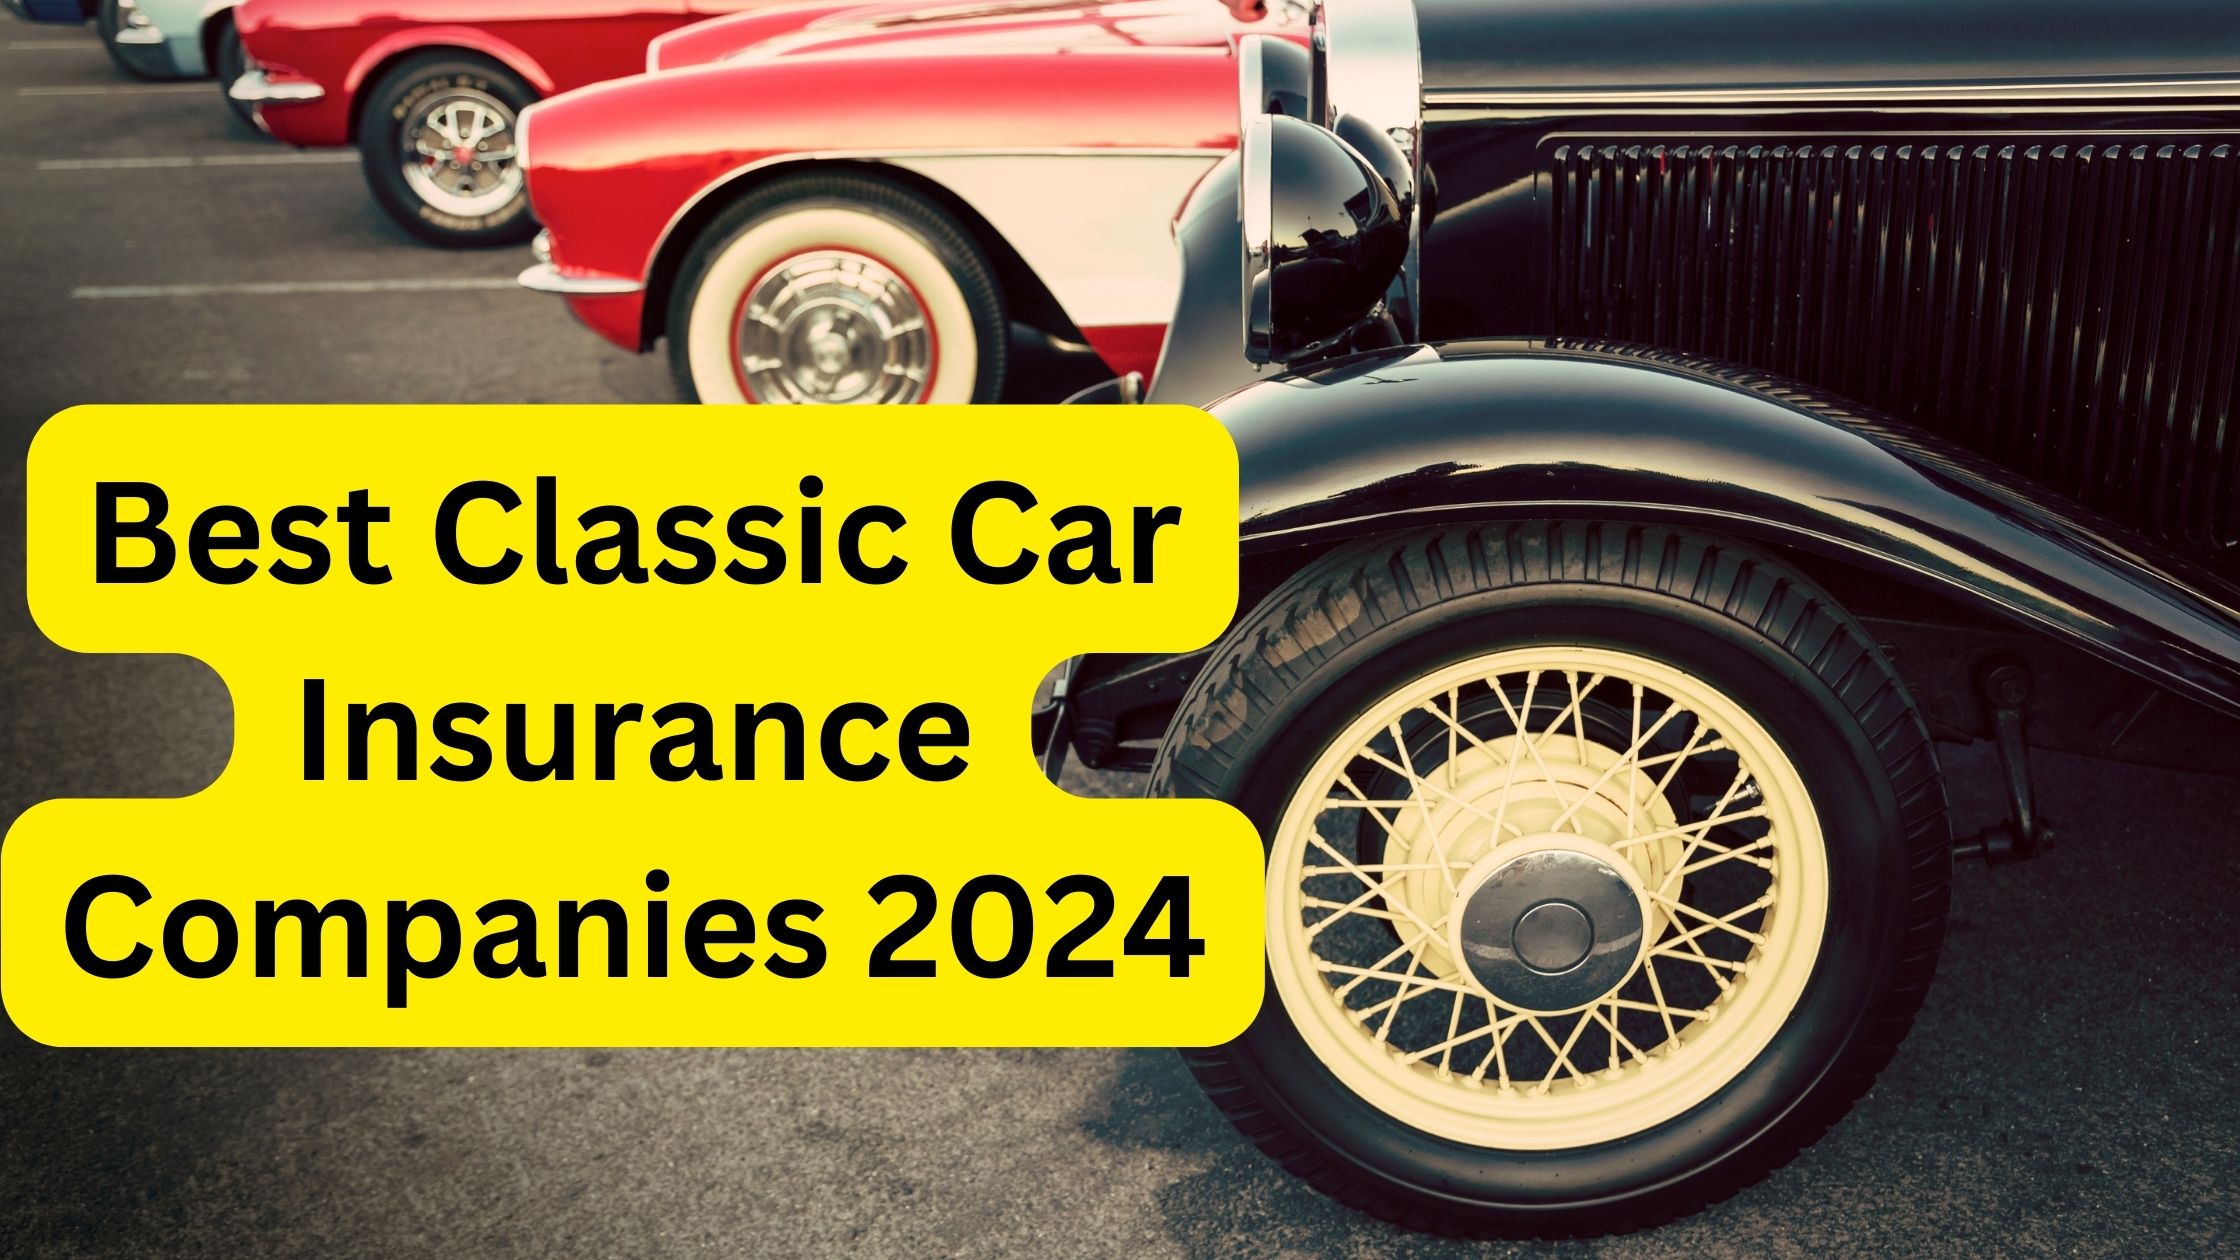 Best Classic Car Insurance Companies 2024